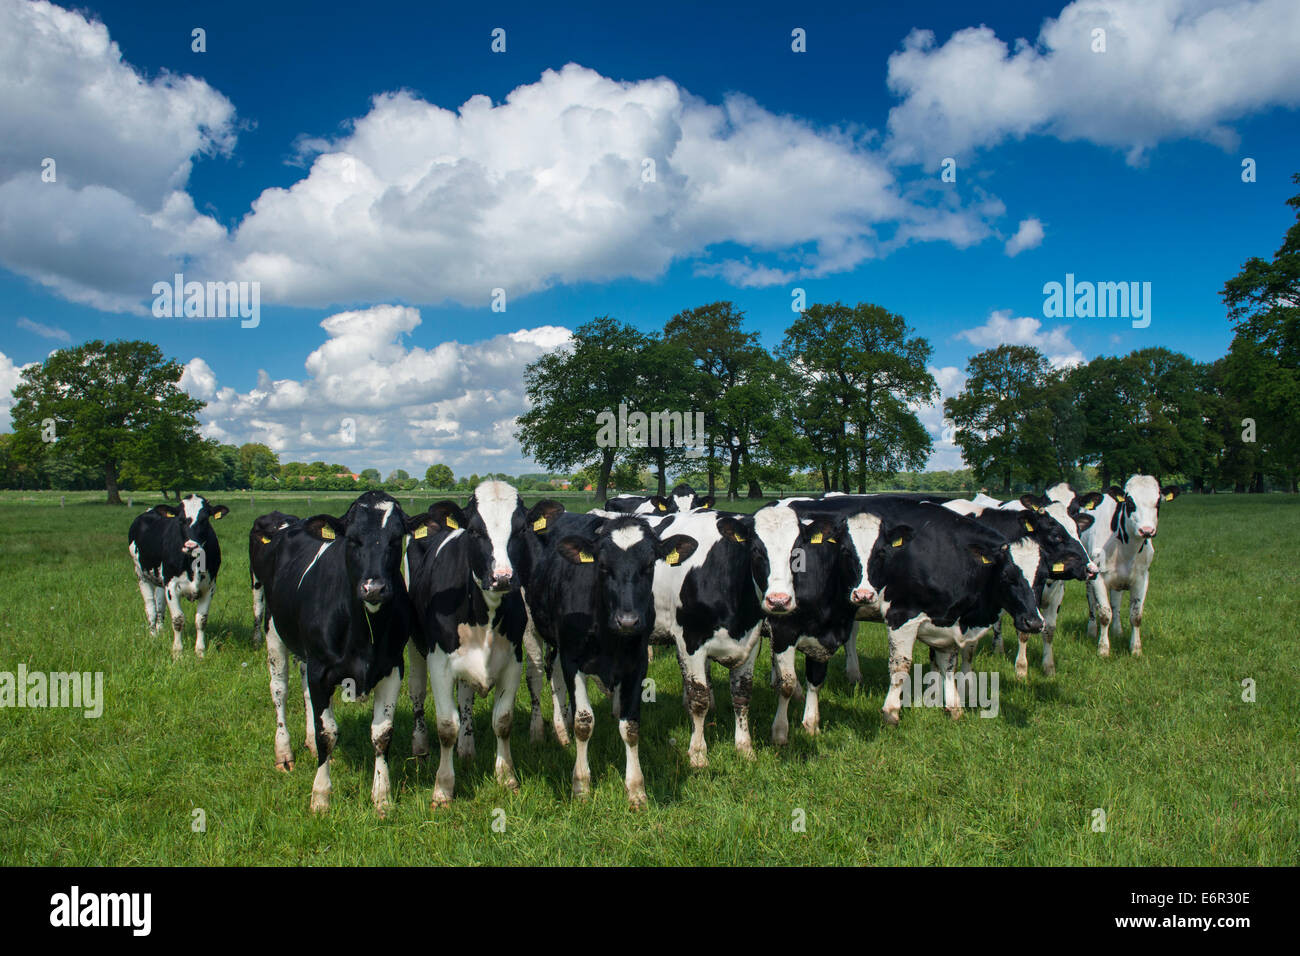 Les bovins laitiers sur les terres à pâturage, den Oever, goldenstedt, district de Vechta, oldenburger münsterland, Basse-Saxe, Allemagne Banque D'Images